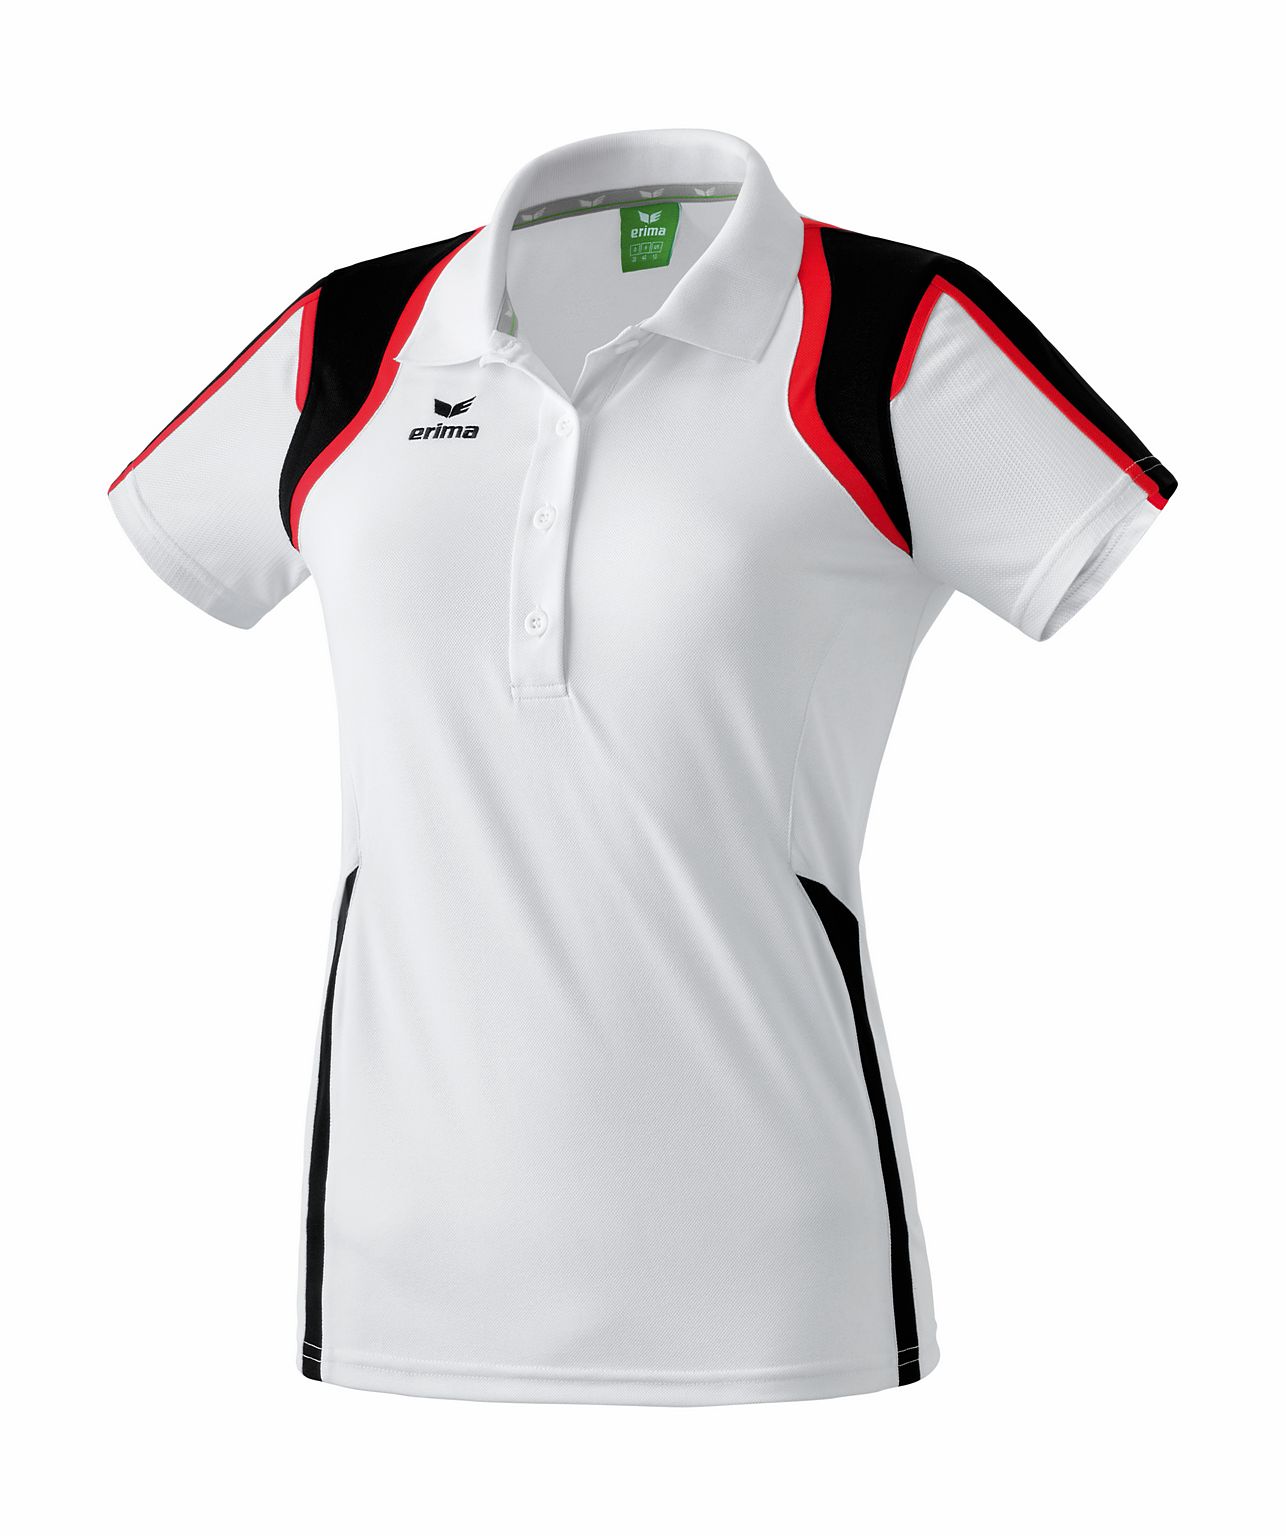 Erima  Poloshirt, Damen  Gr. 38  Weiß/Schwarz/Rot